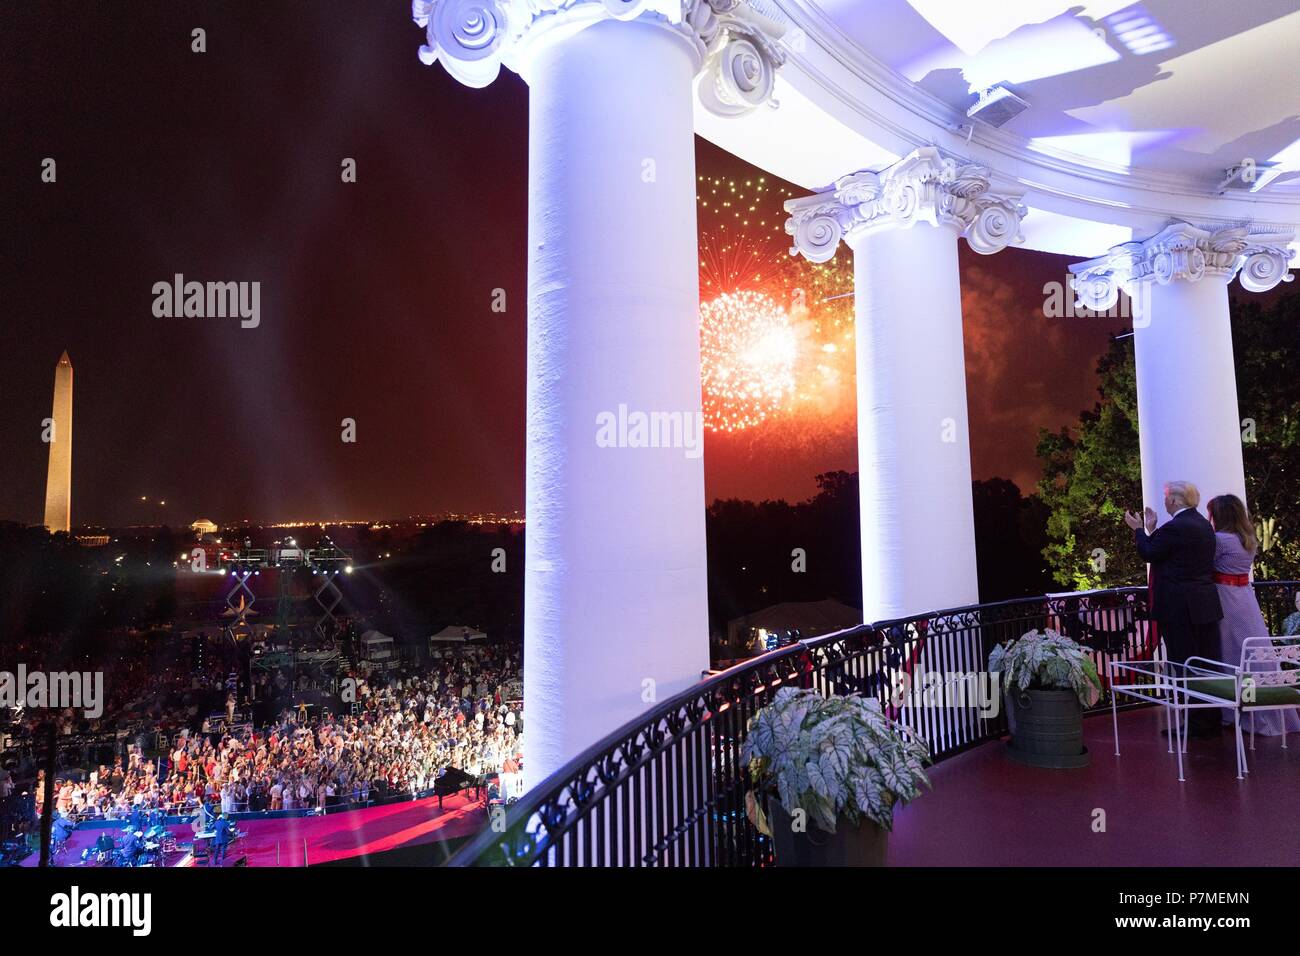 Stunning Donald Trump Melania PHOTO July 4 Fireworks White House Balcony 5x7